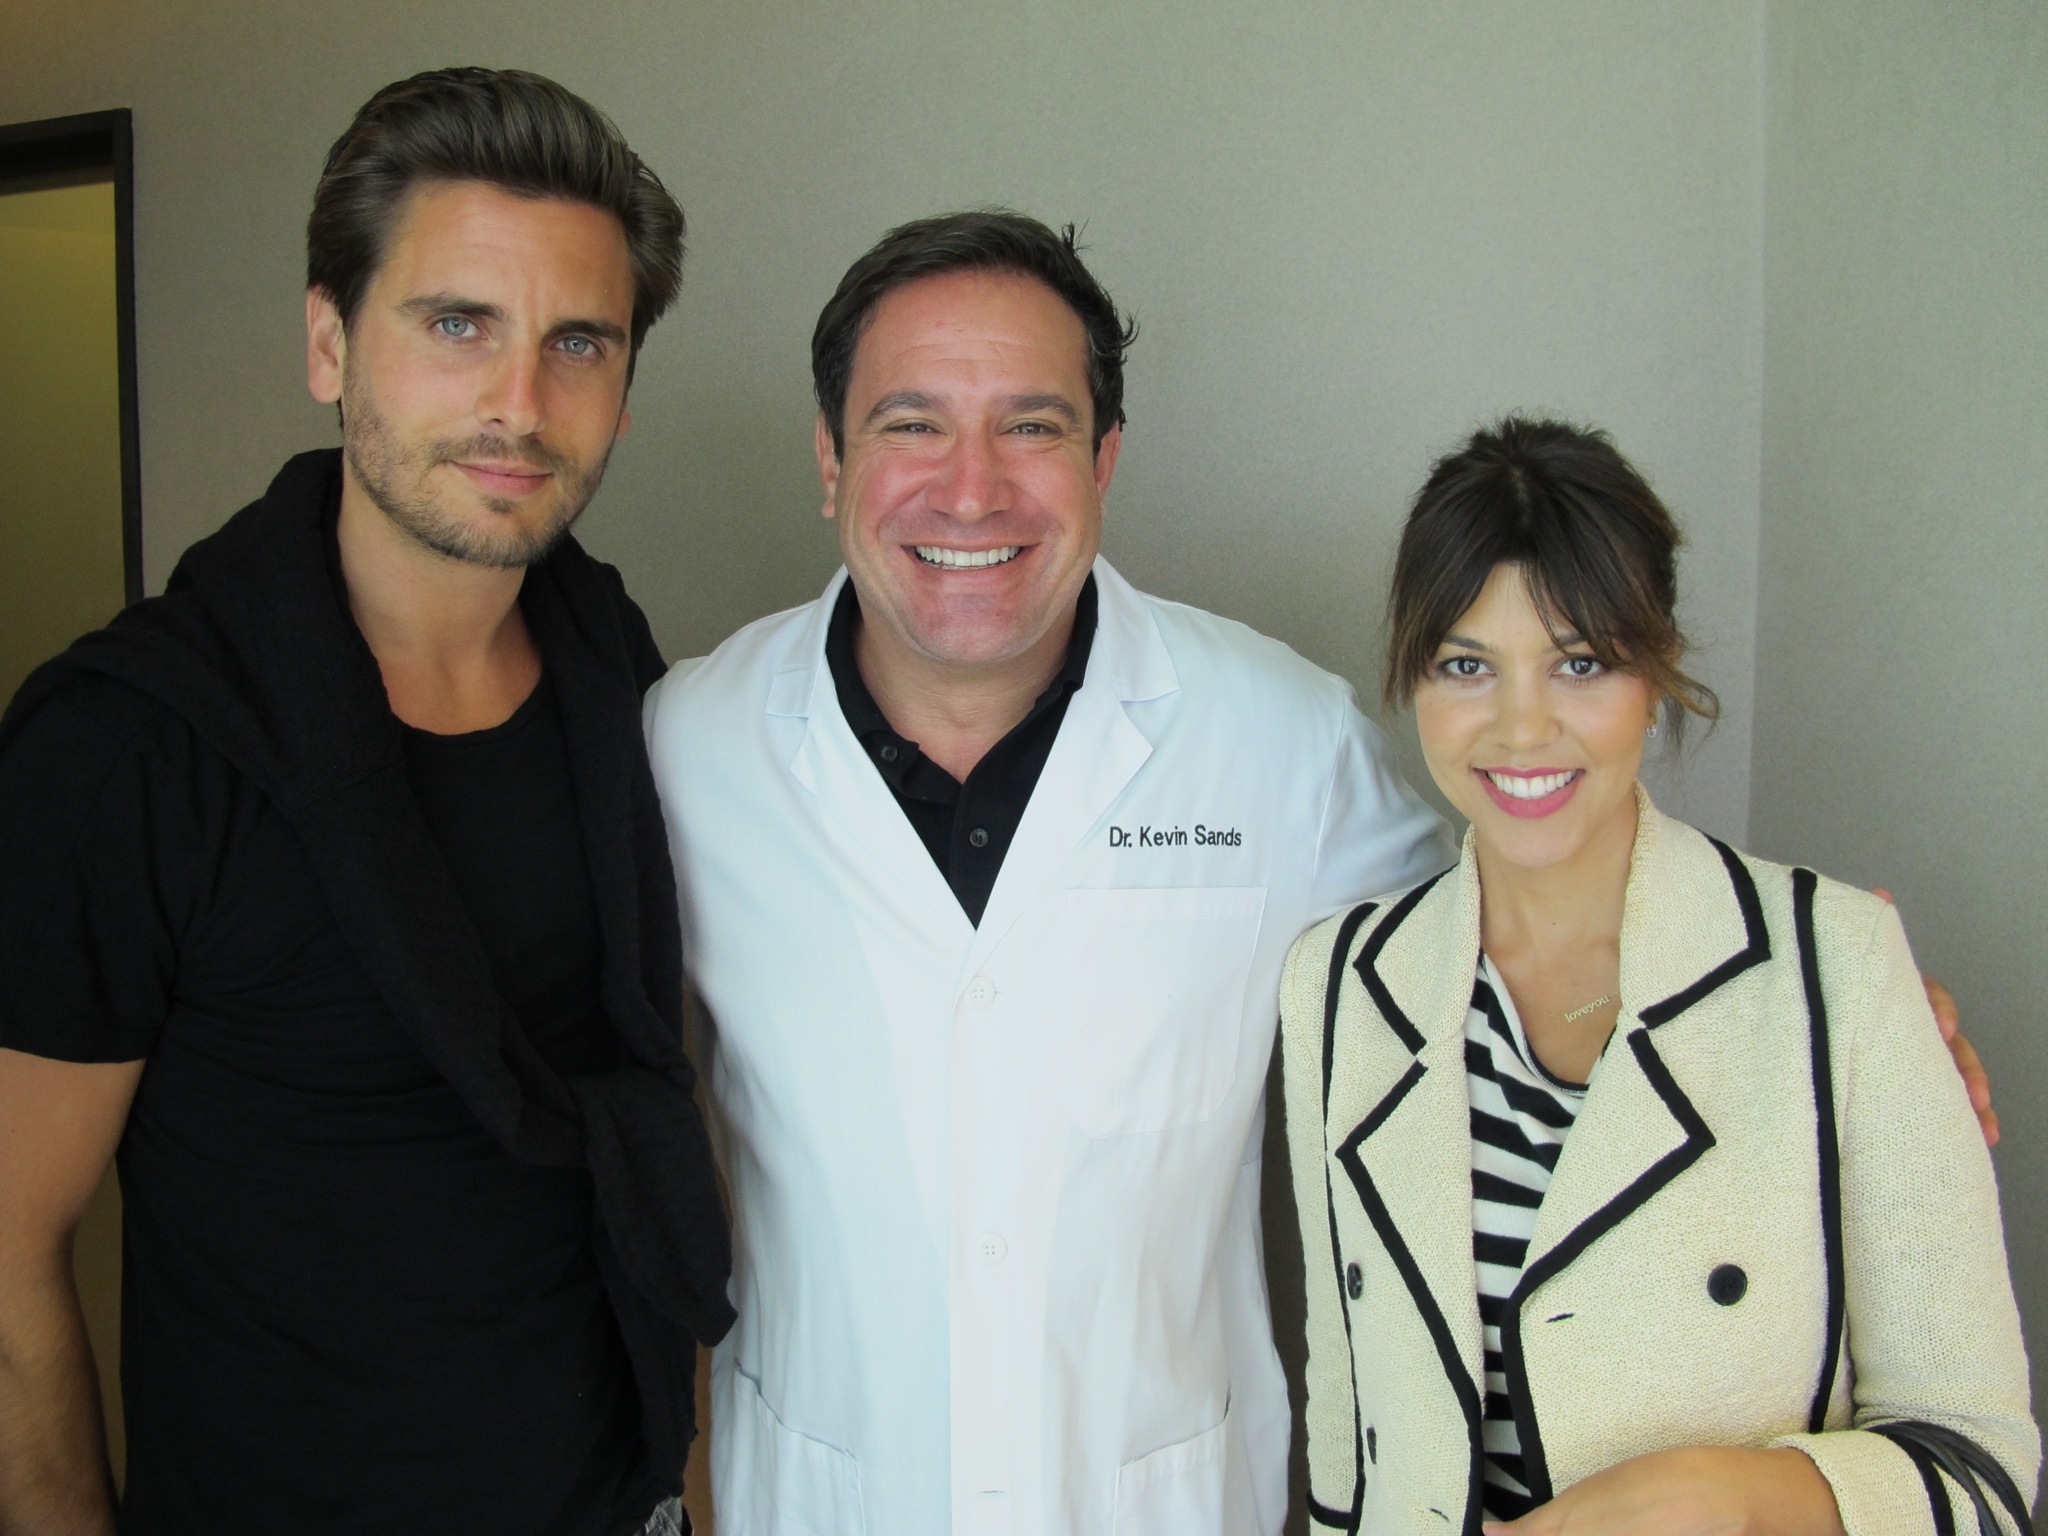 Dr. Kevin Sands with Kourtney Kardashian